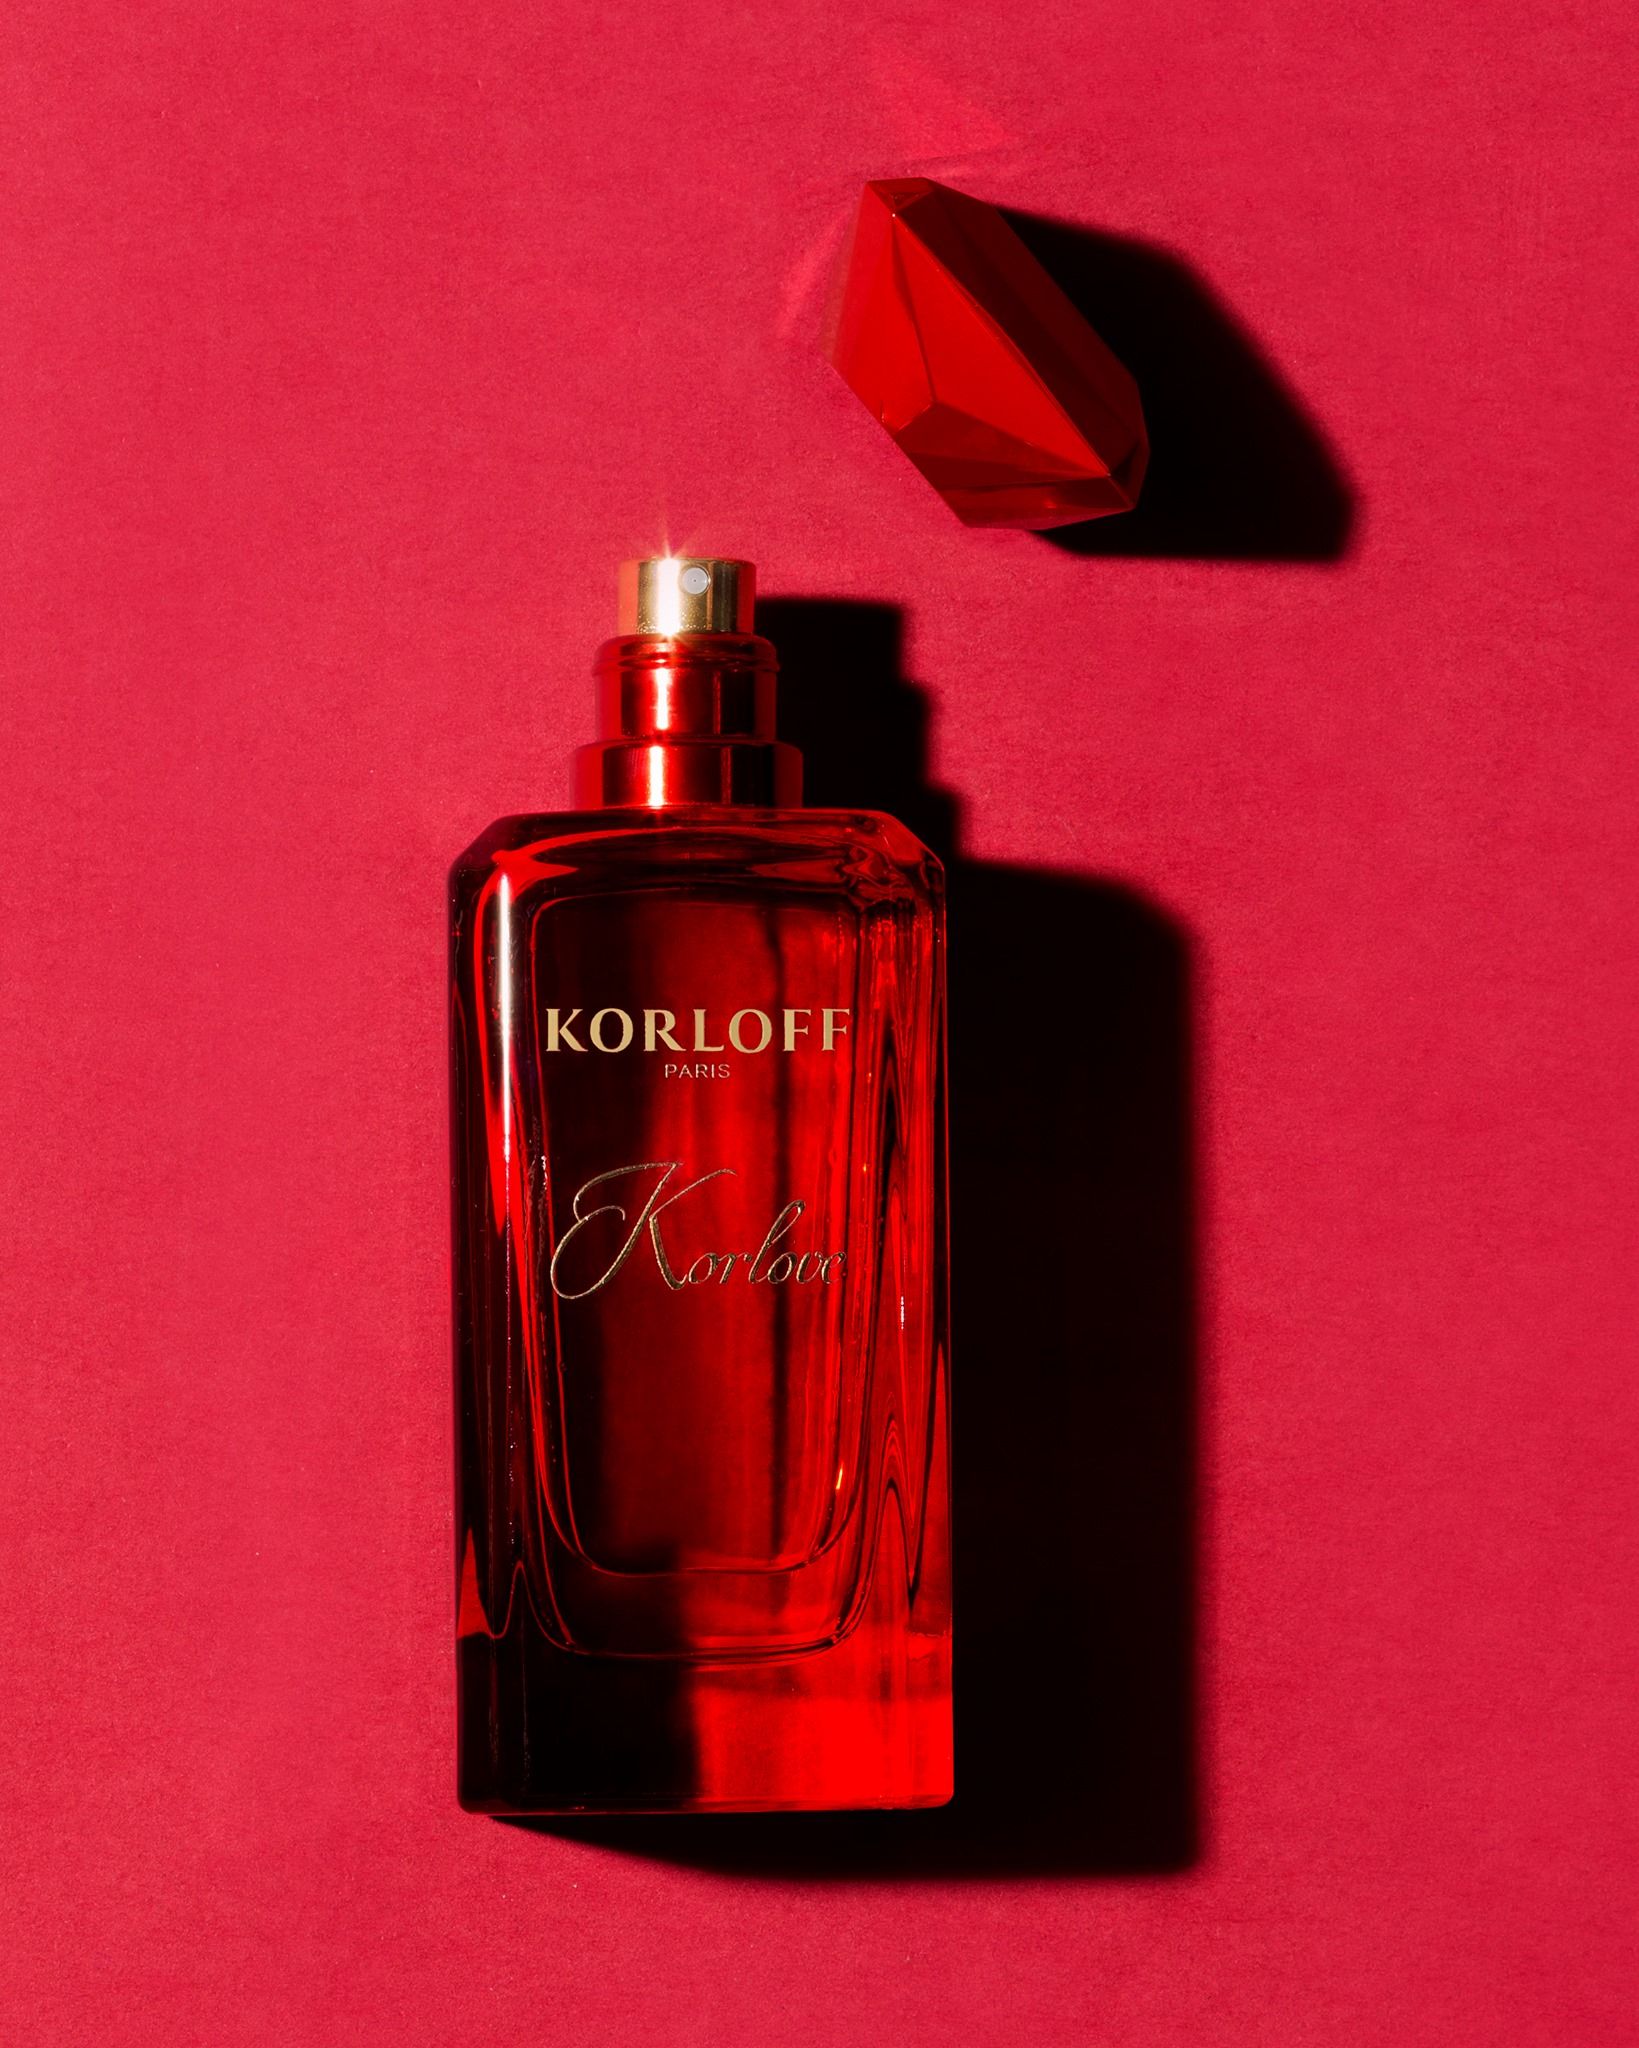 Korlove Korloff Paris perfume - a fragrance for women 2021